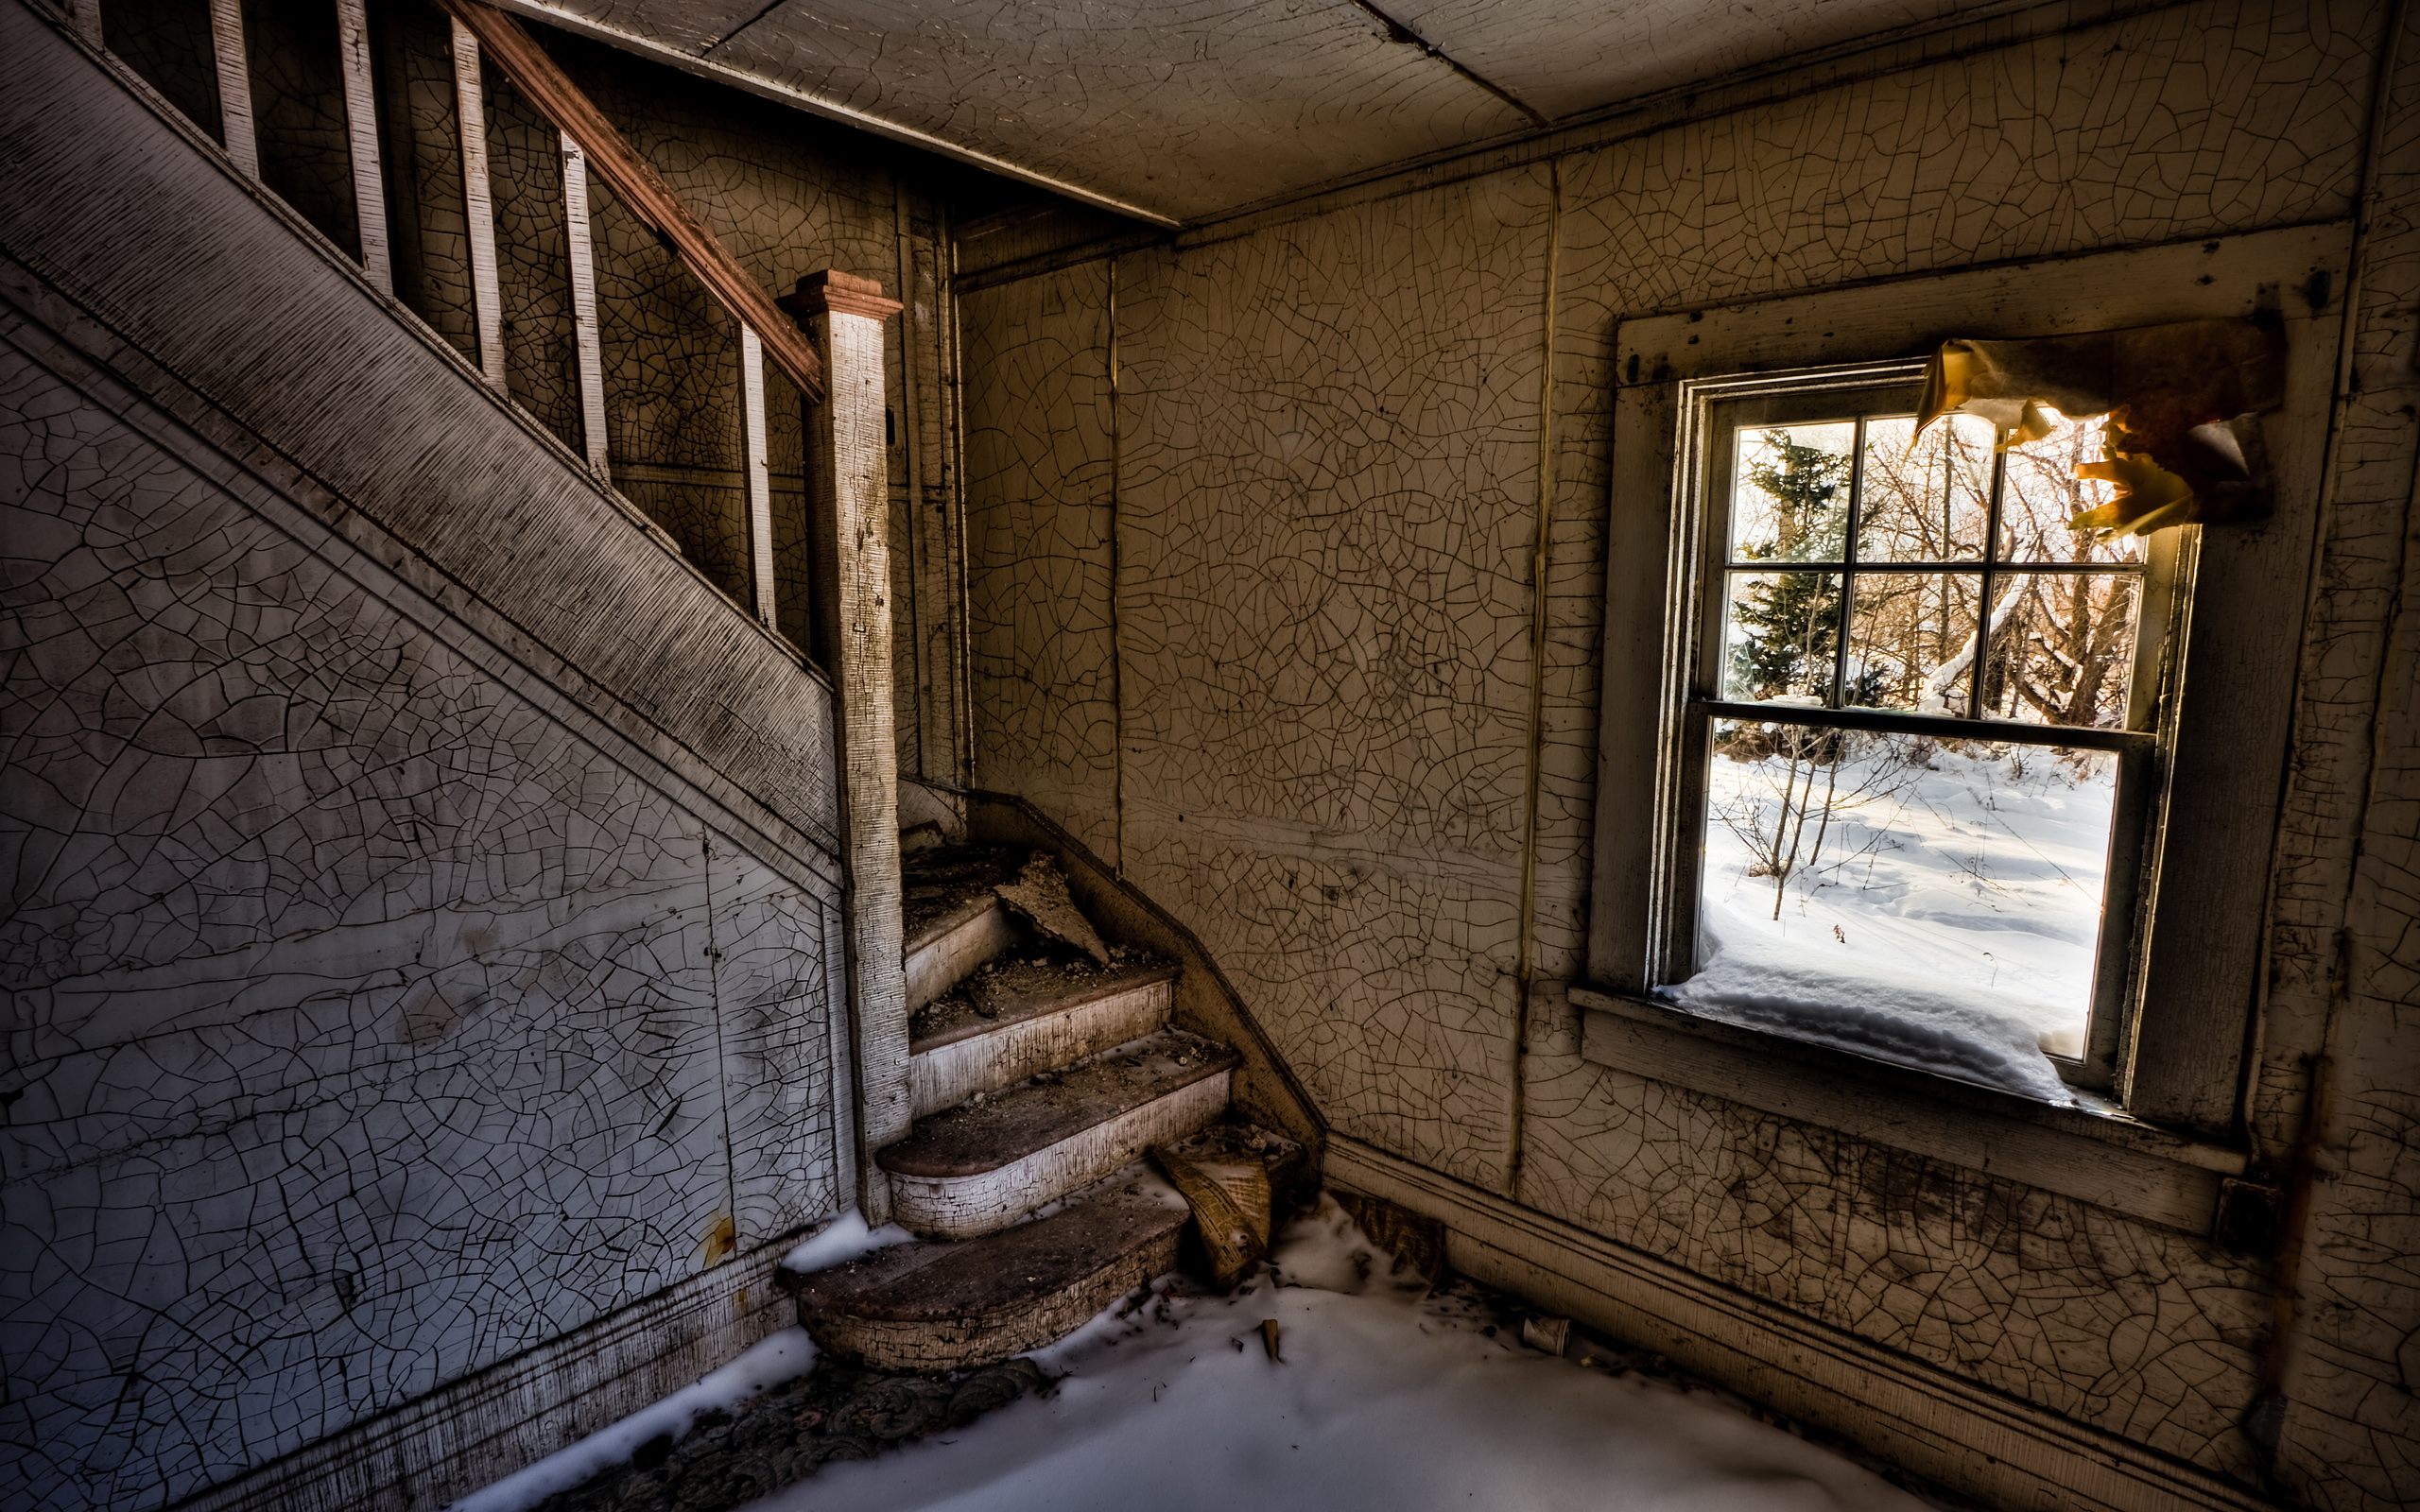 Разрушенный подъезд. Заброшенный дом внутри. Заброшенное здание внутри. Окно в заброшенном здании. Окно в заброшенном доме.